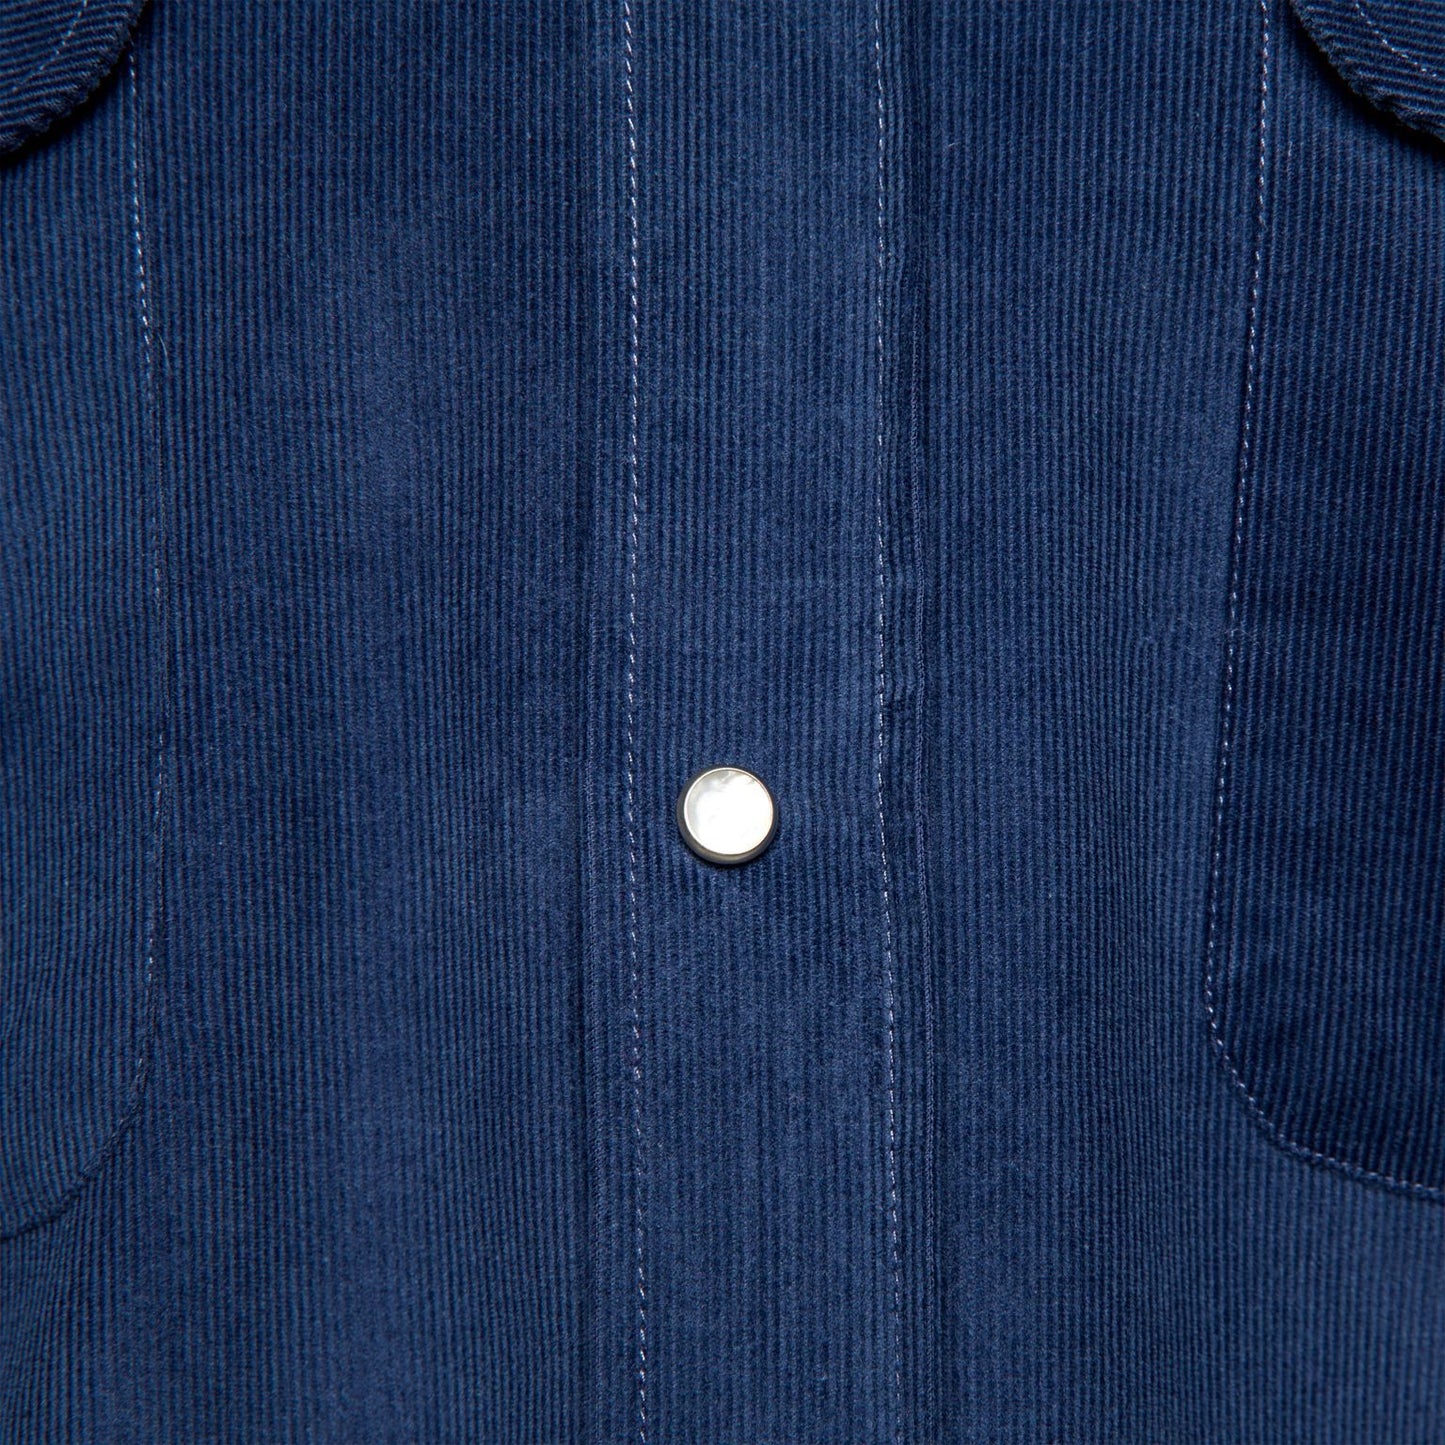 Kacey Shirt in Blue Pinwale Corduroy